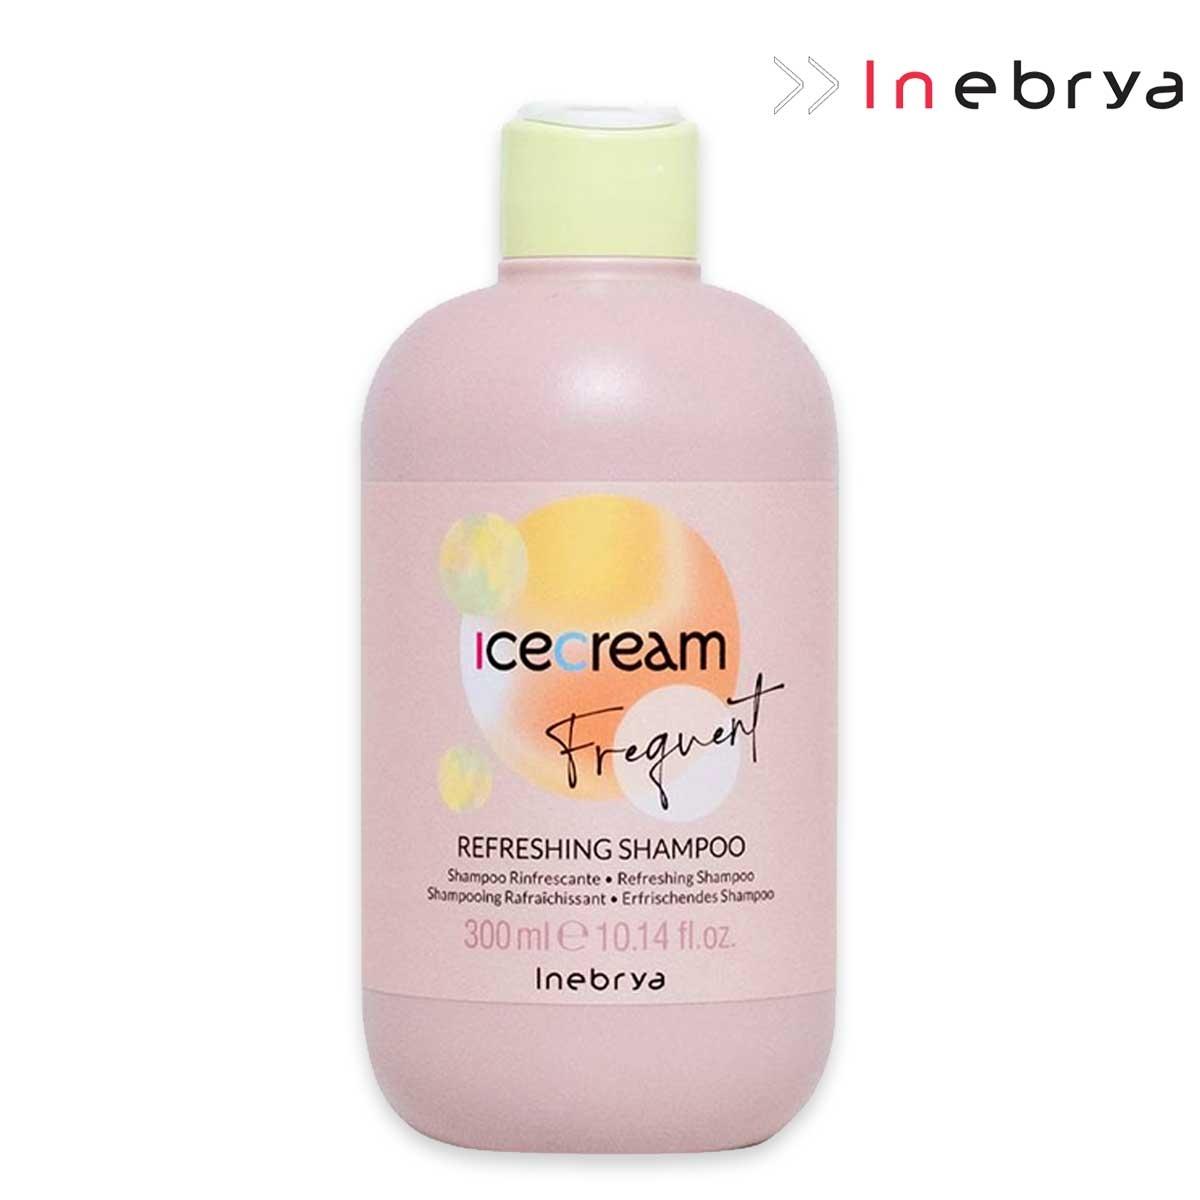 Inebrya refreshing shampoo 300 ml